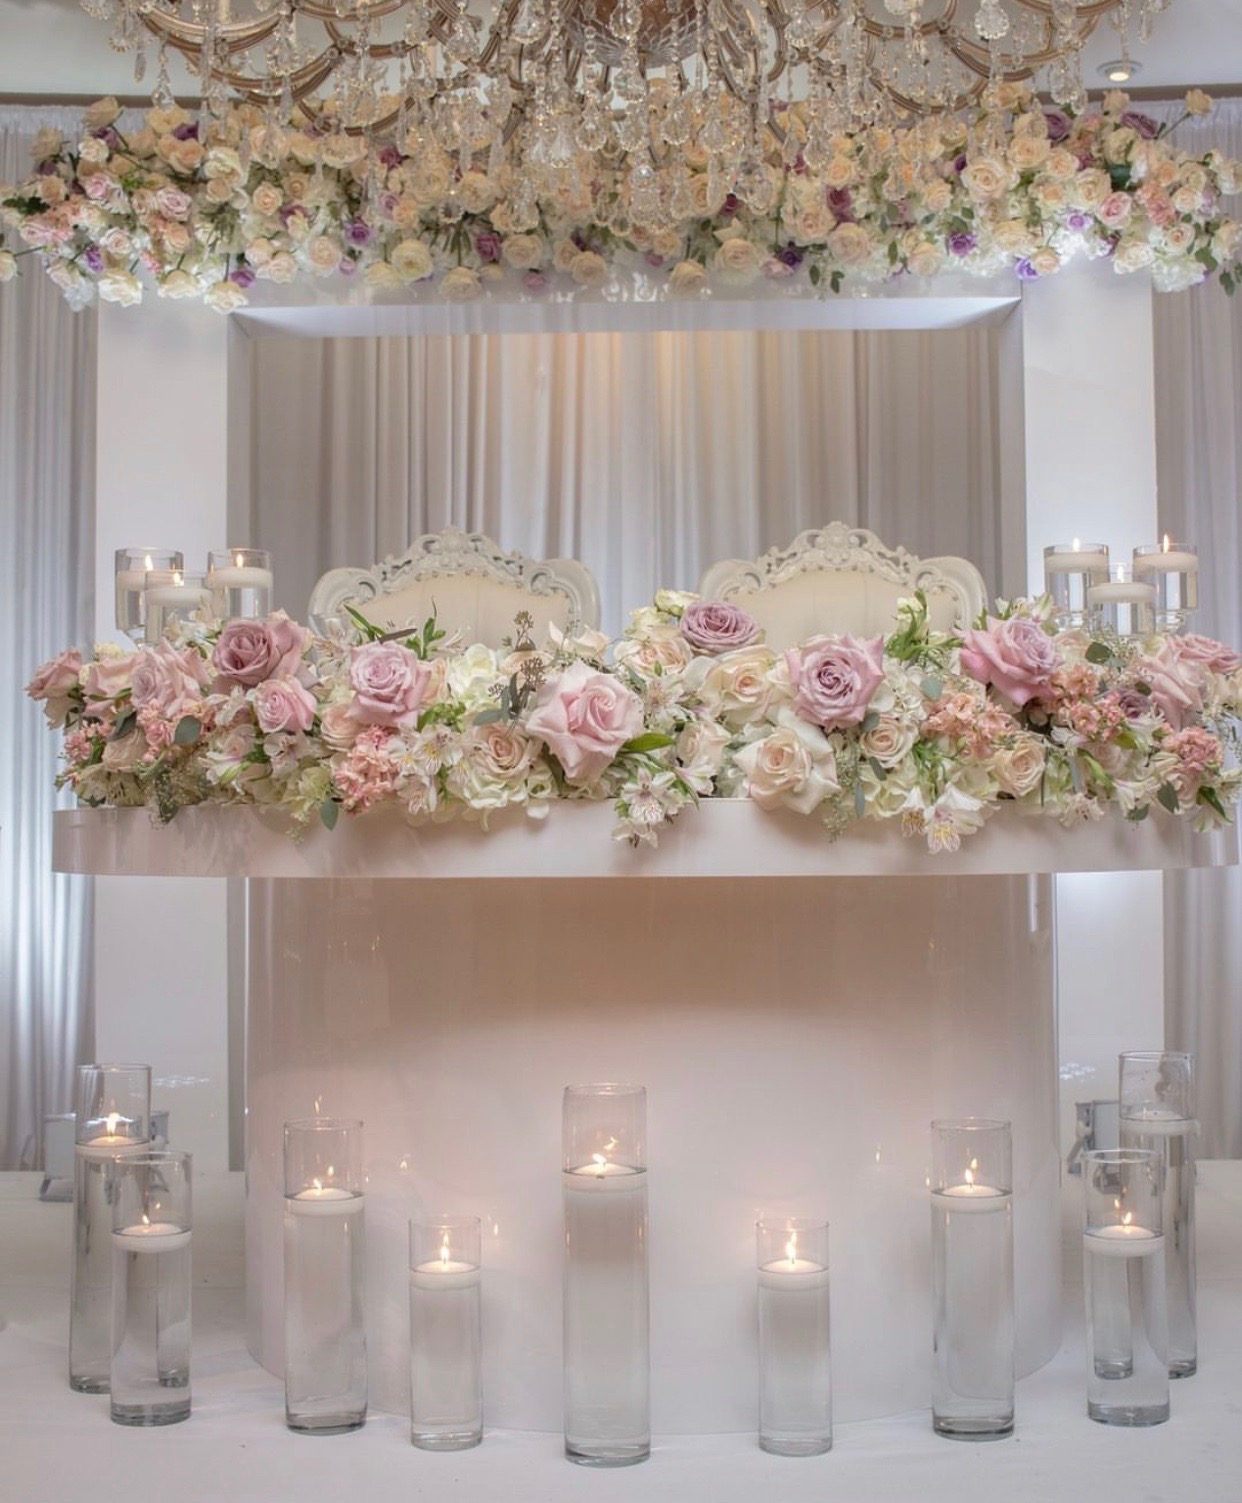 mladenacki sto - elegantna dekoracja mladenackog stola - bele  i roze ruže i hortenzije - setovi svecaIMG-8072